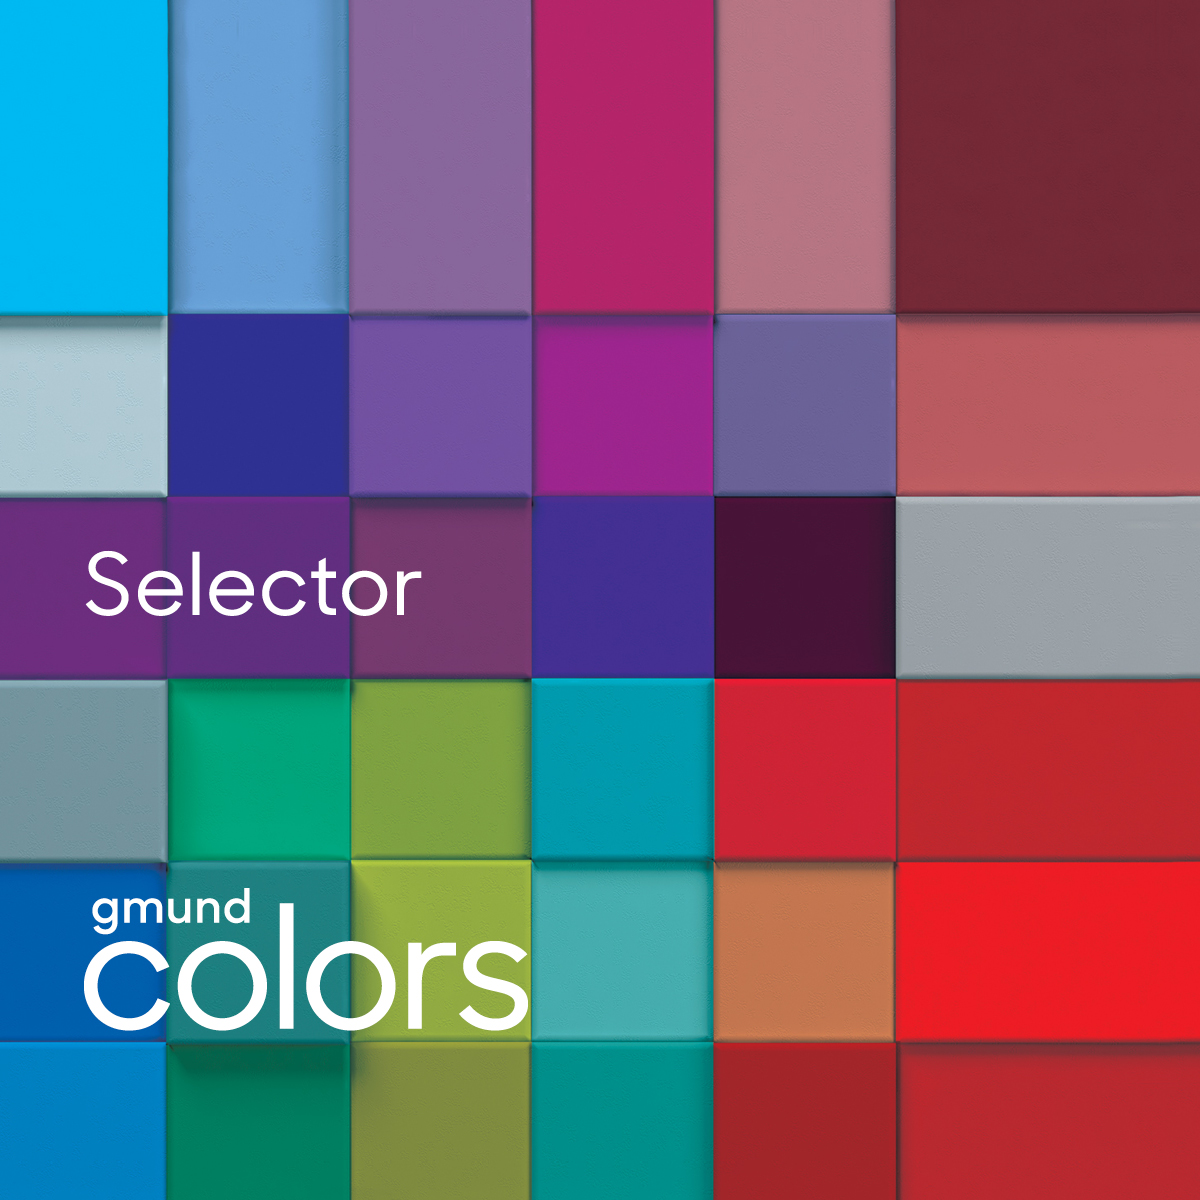 Gmund Colors - Selector